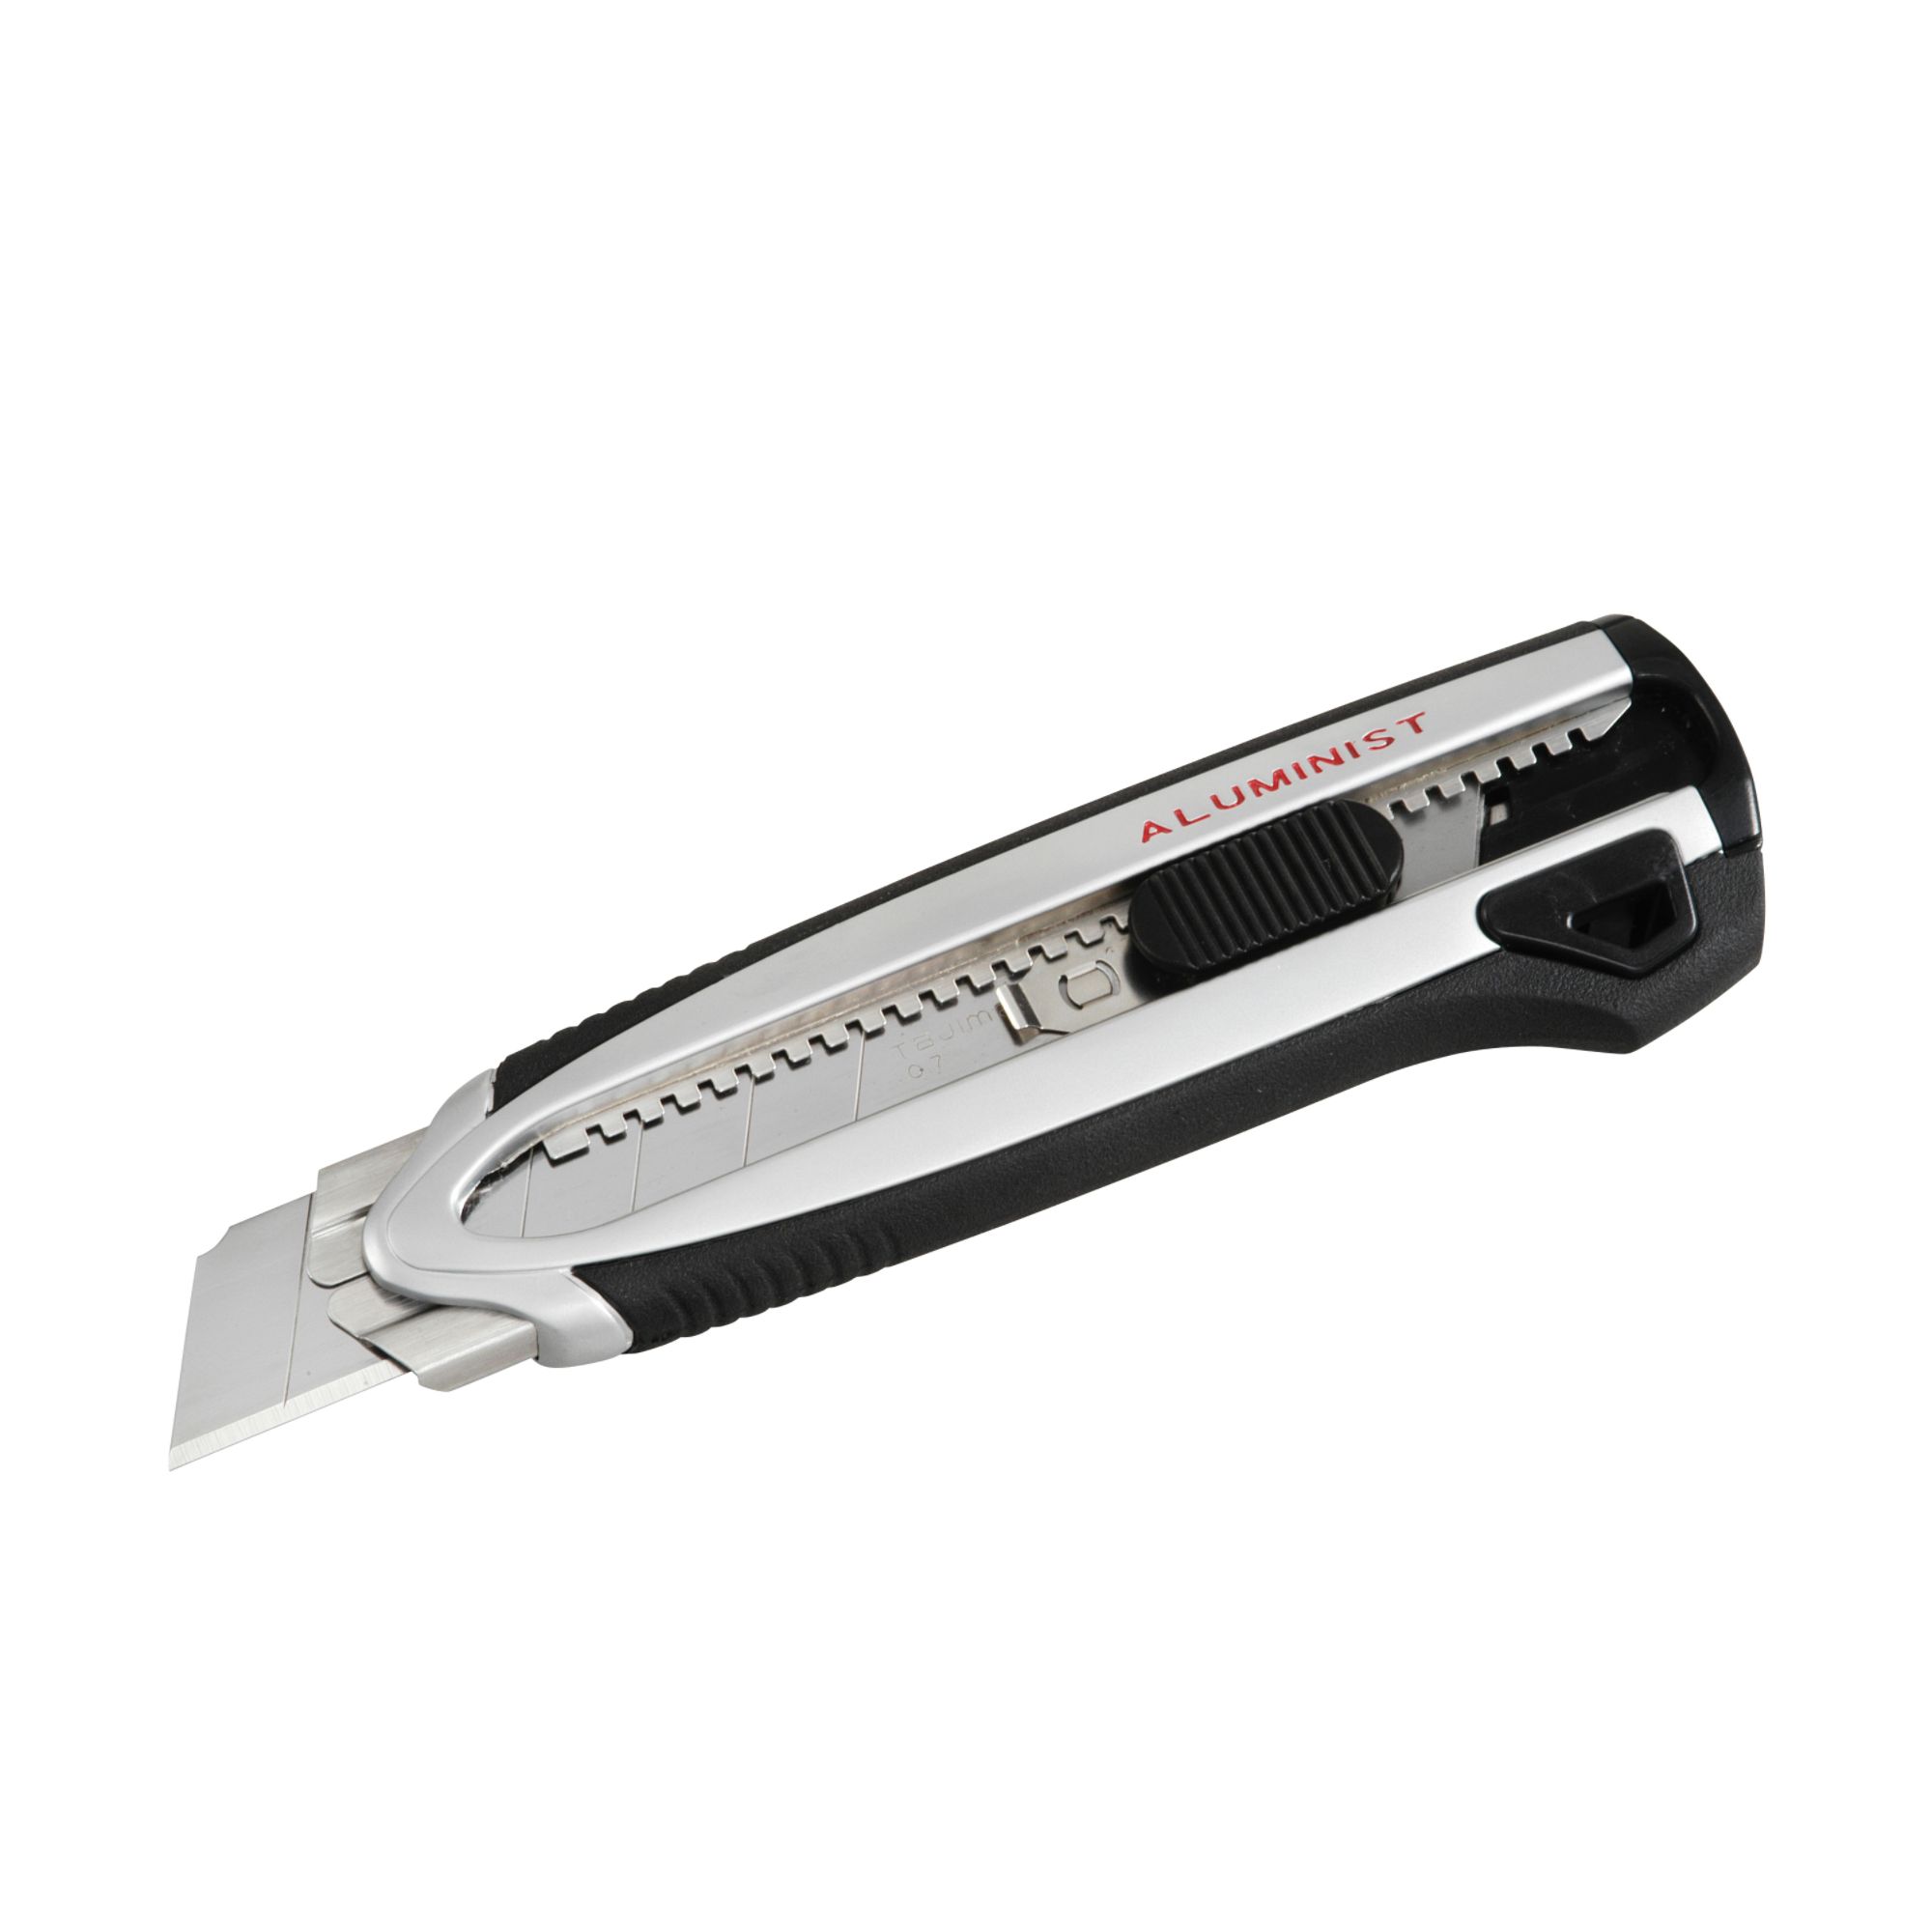 Tajima Tool Corp ROCK HARD Aluminist Magazine knife, silver